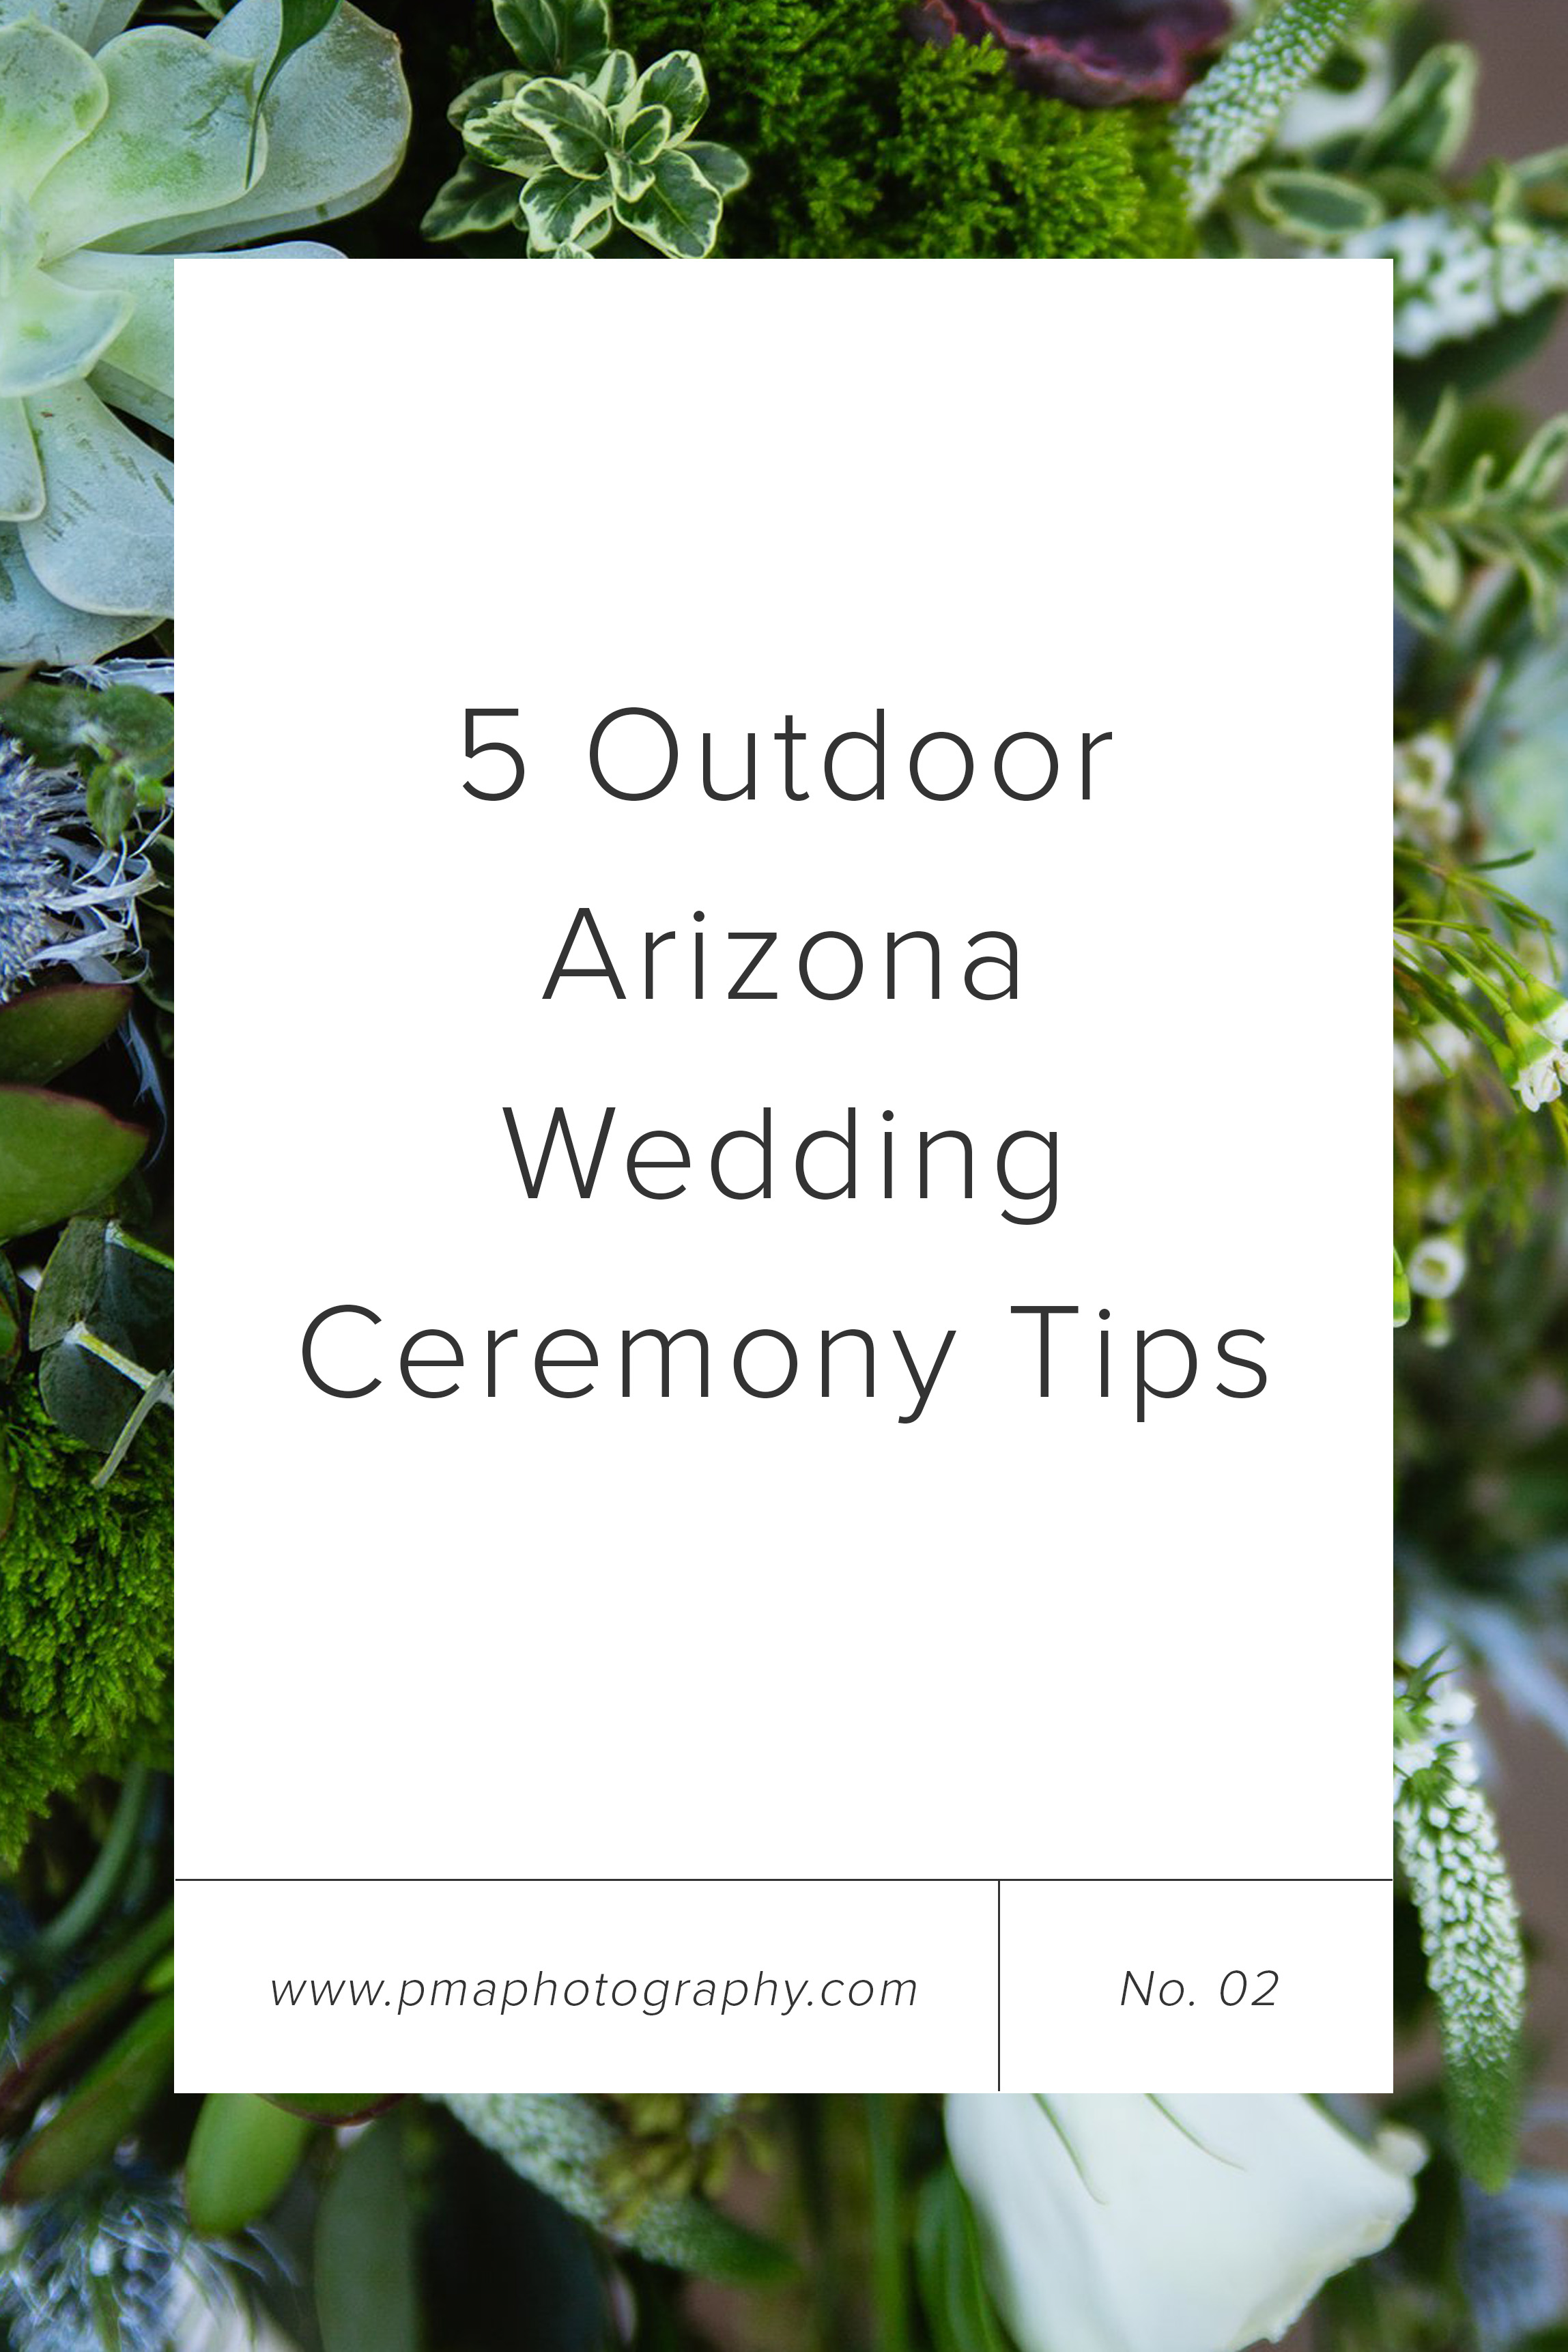 5 outdoor Arizona wedding ceremony tips by professional Phoenix wedding photographer PMA Photography.